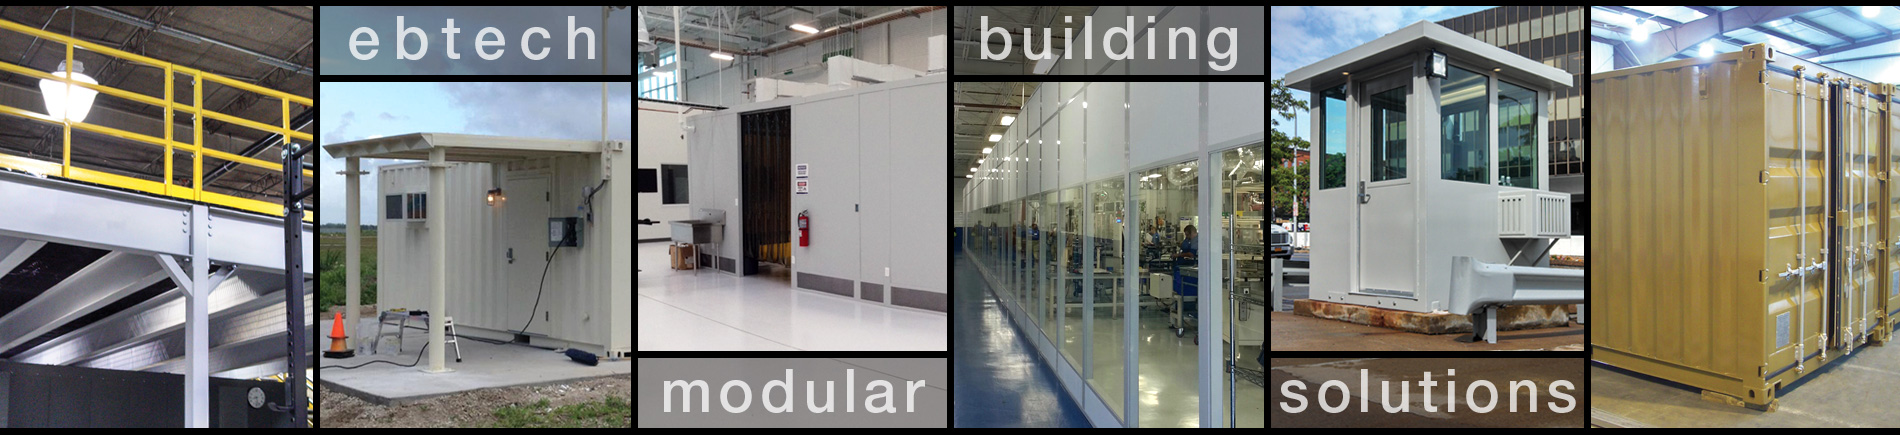 modular building solutions